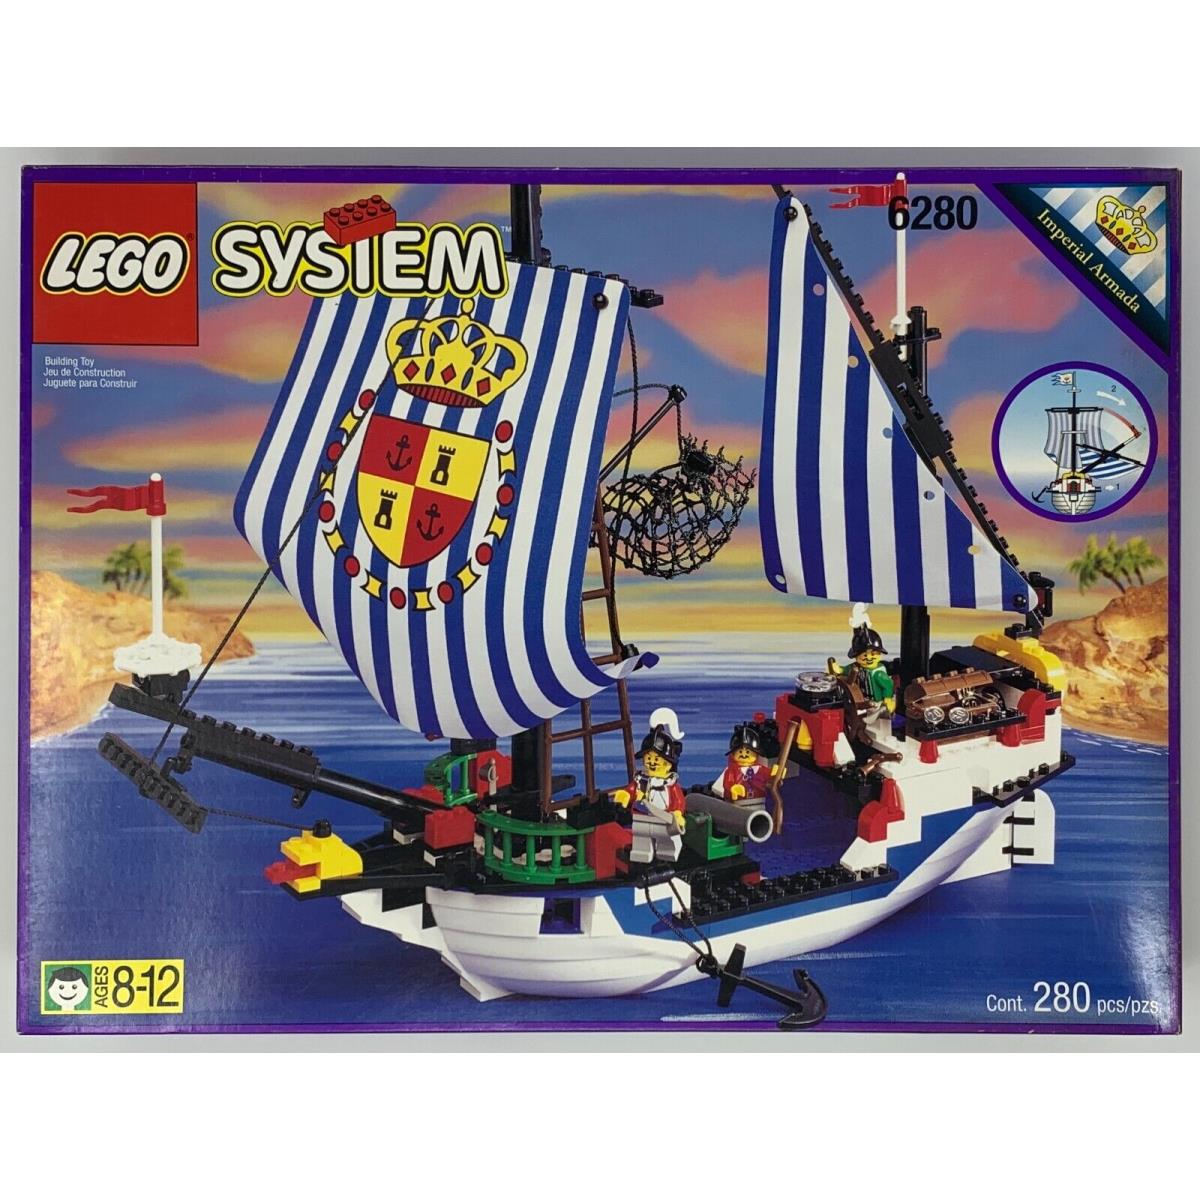 Lego 6280 Armada Flagship 1996